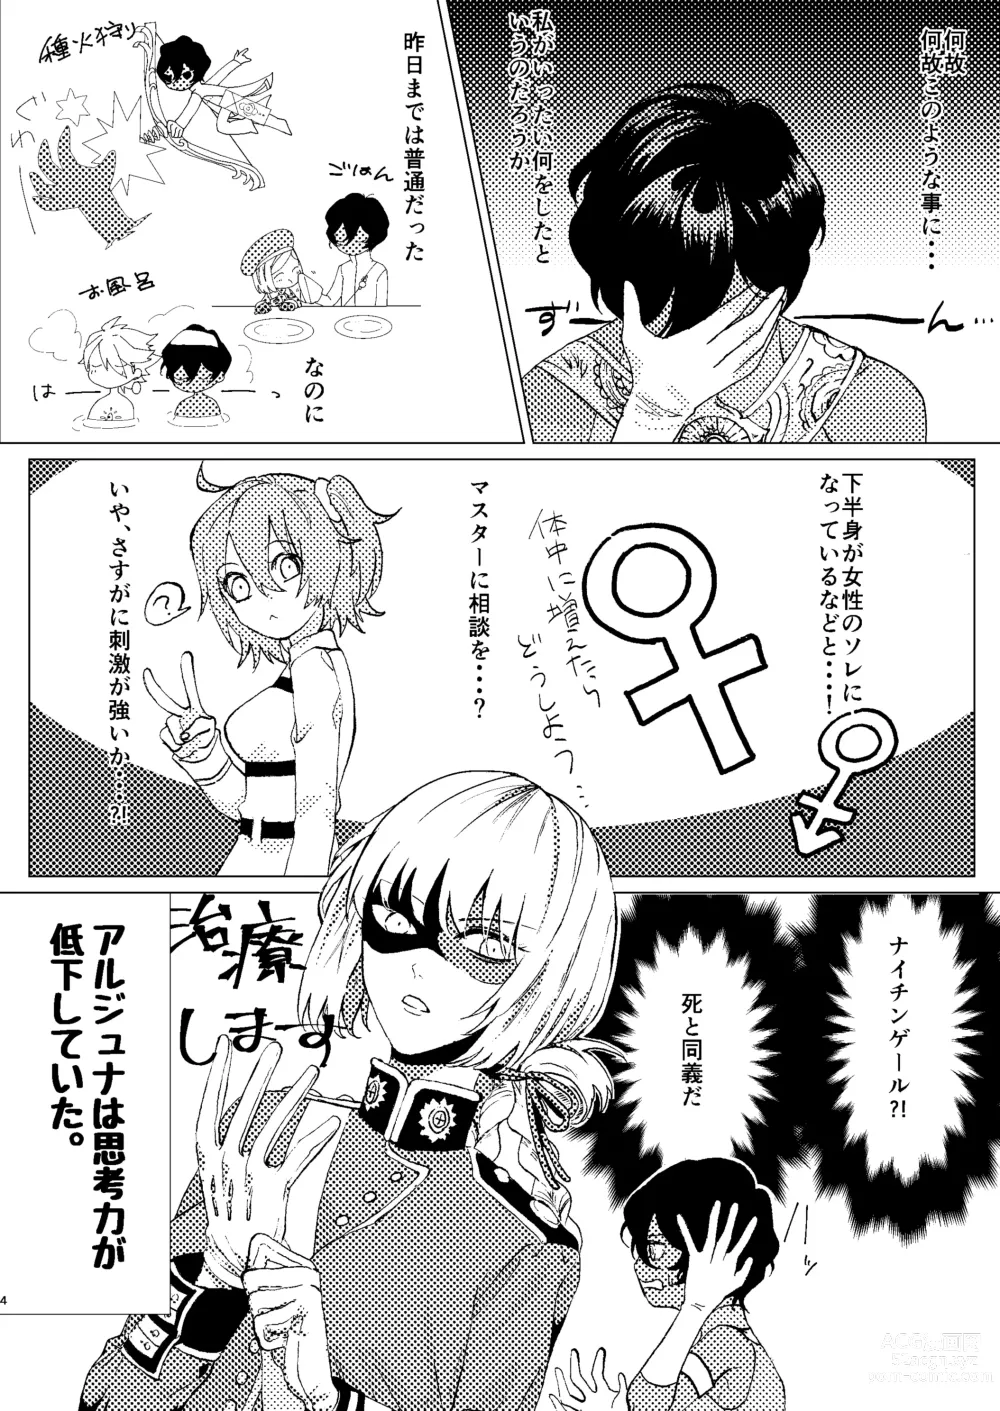 Page 3 of doujinshi honeydew nightmare